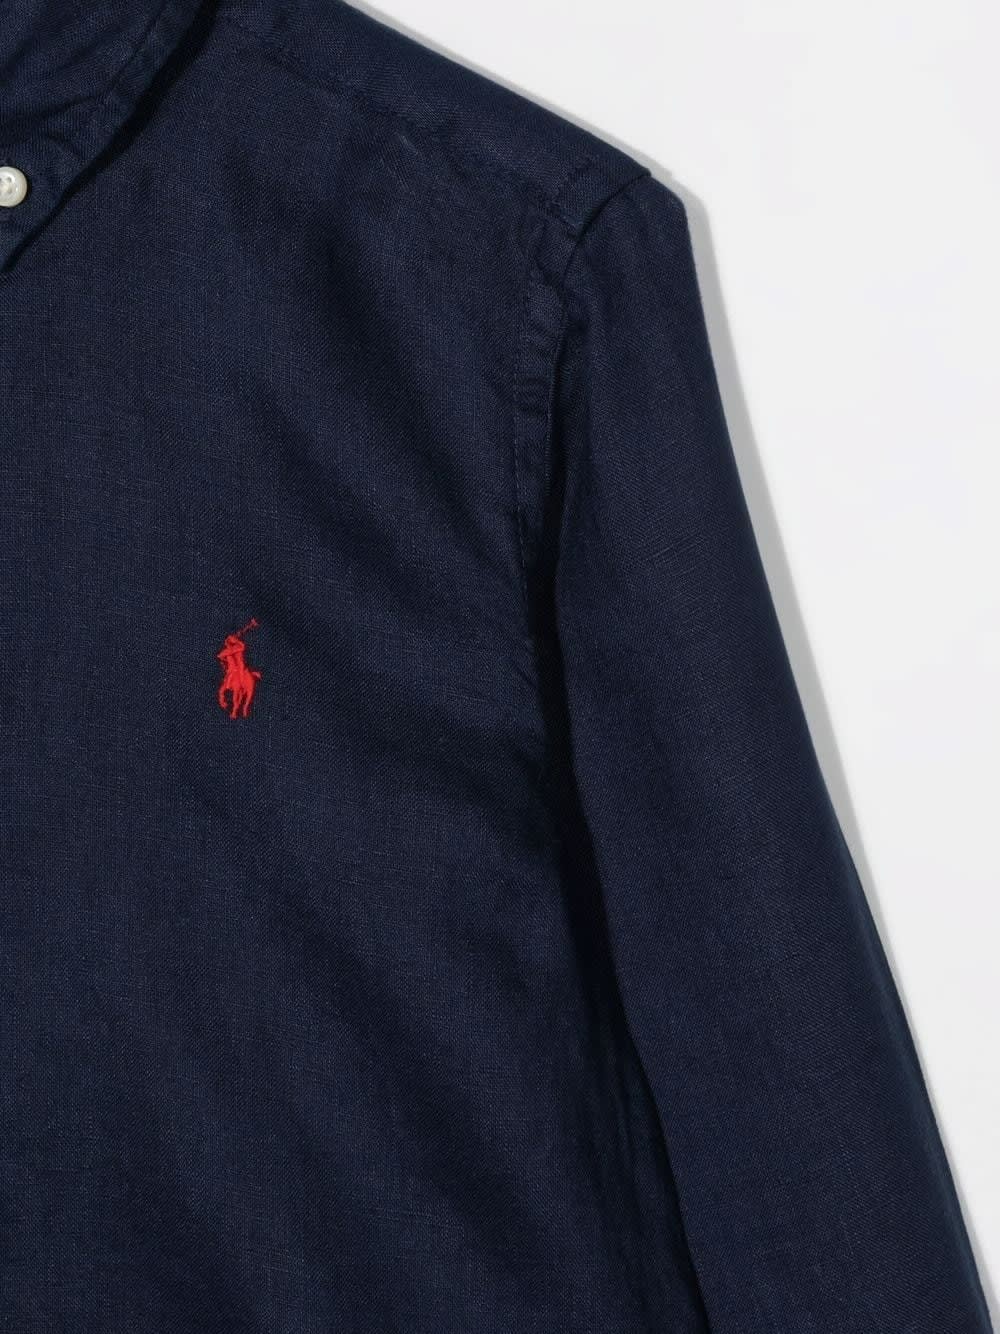 Shop Ralph Lauren Navy Blue Linen Shirt With Embroidered Pony